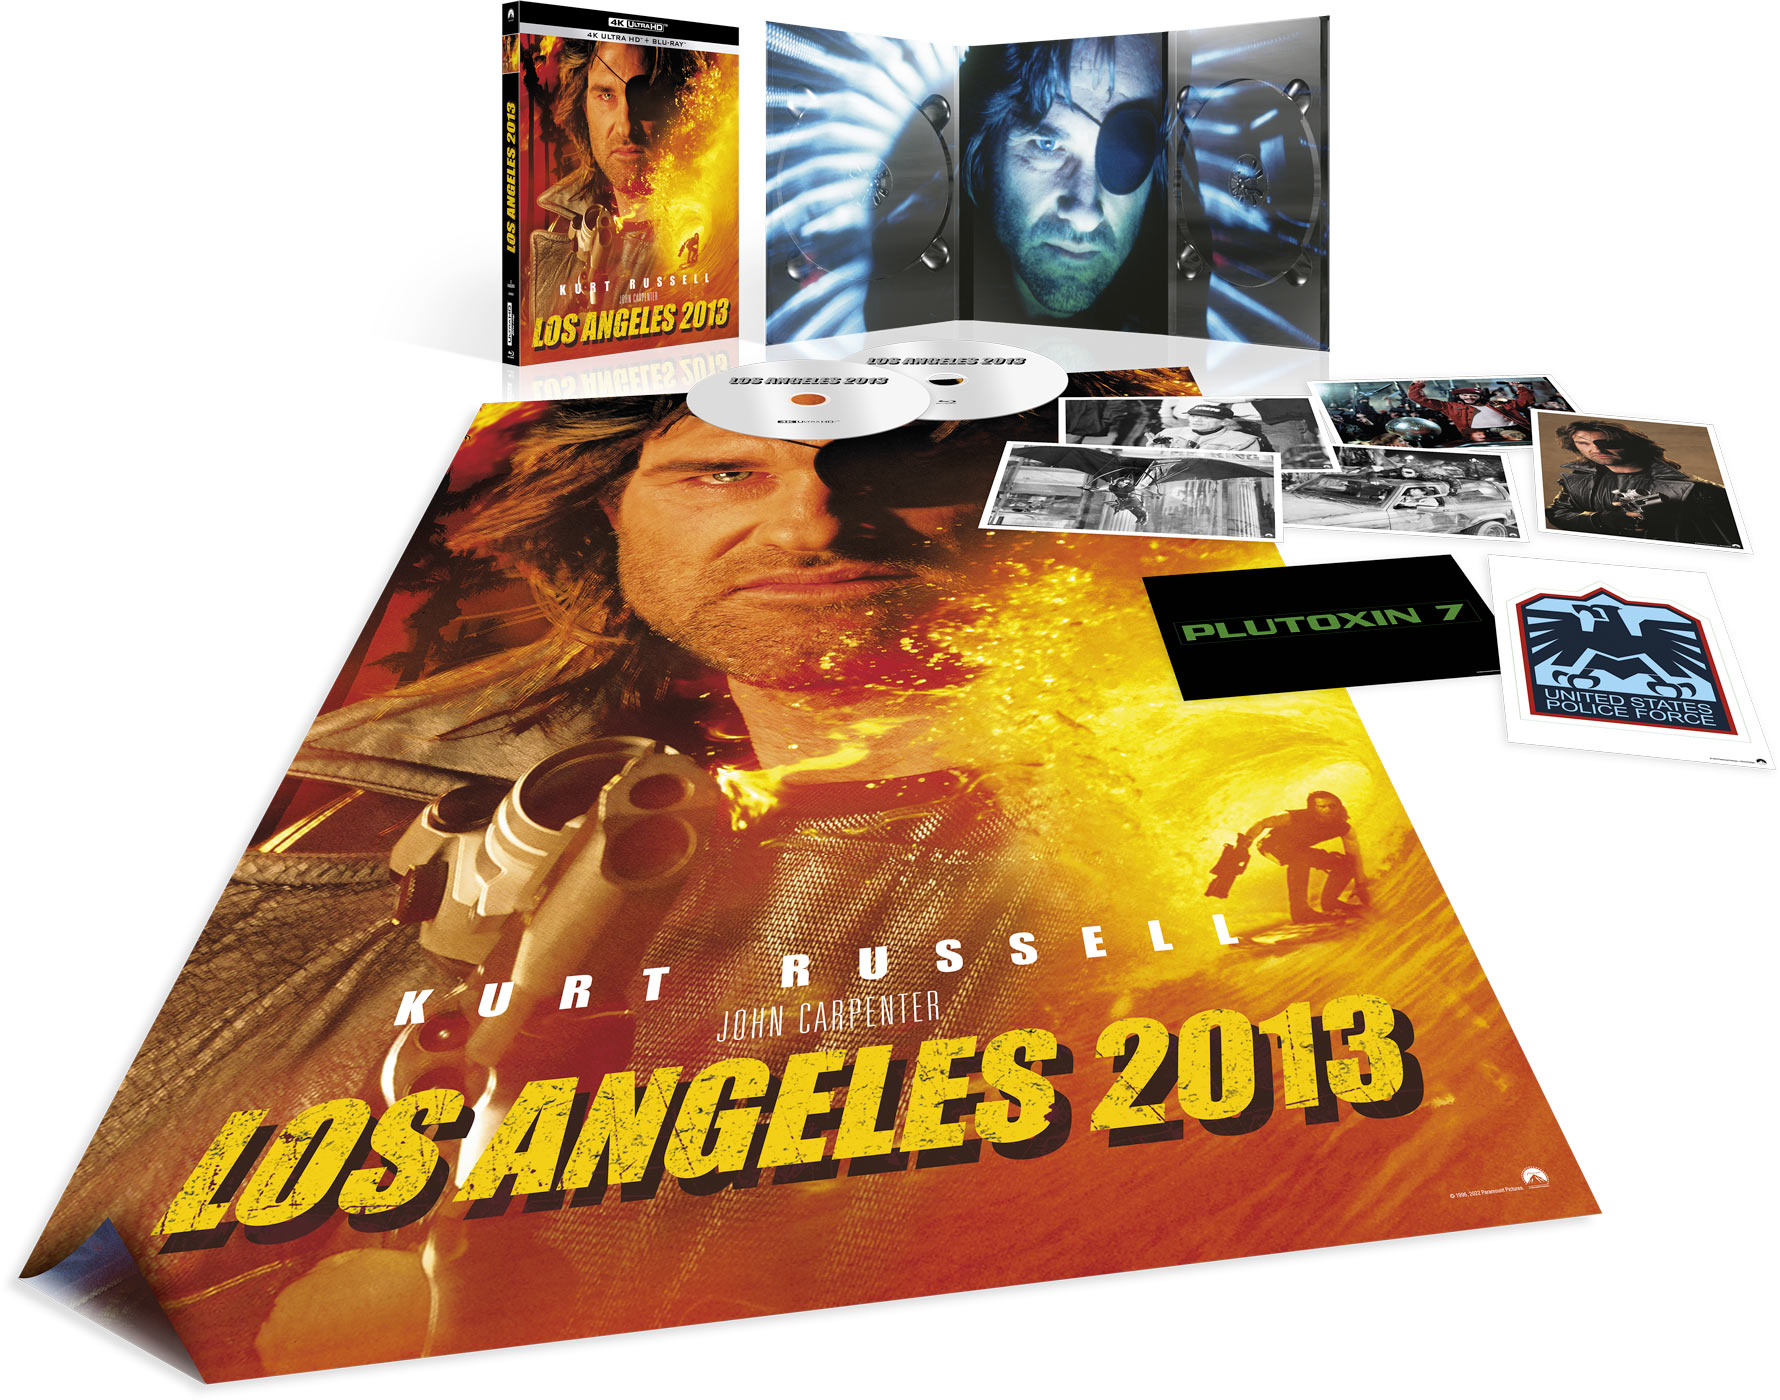 Los Angeles 2013 (1996) - 4K Ultra HD + Blu-ray - Édition limitée